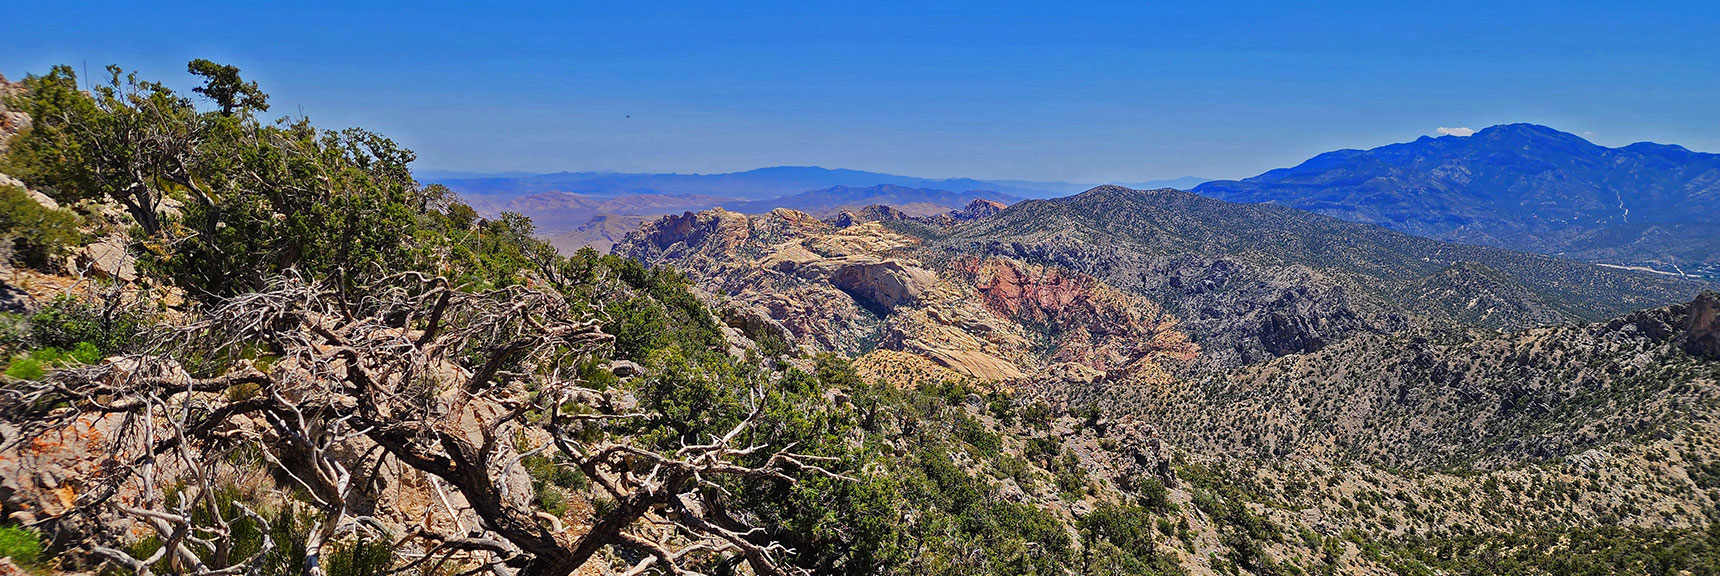 Hidden Peak and South Upper Crest Ridgeline Viewed from Above Indecision Peak | Mt Wilson to Hidden Peak | Upper Crest Ridgeline | Rainbow Mountain Wilderness, Nevada